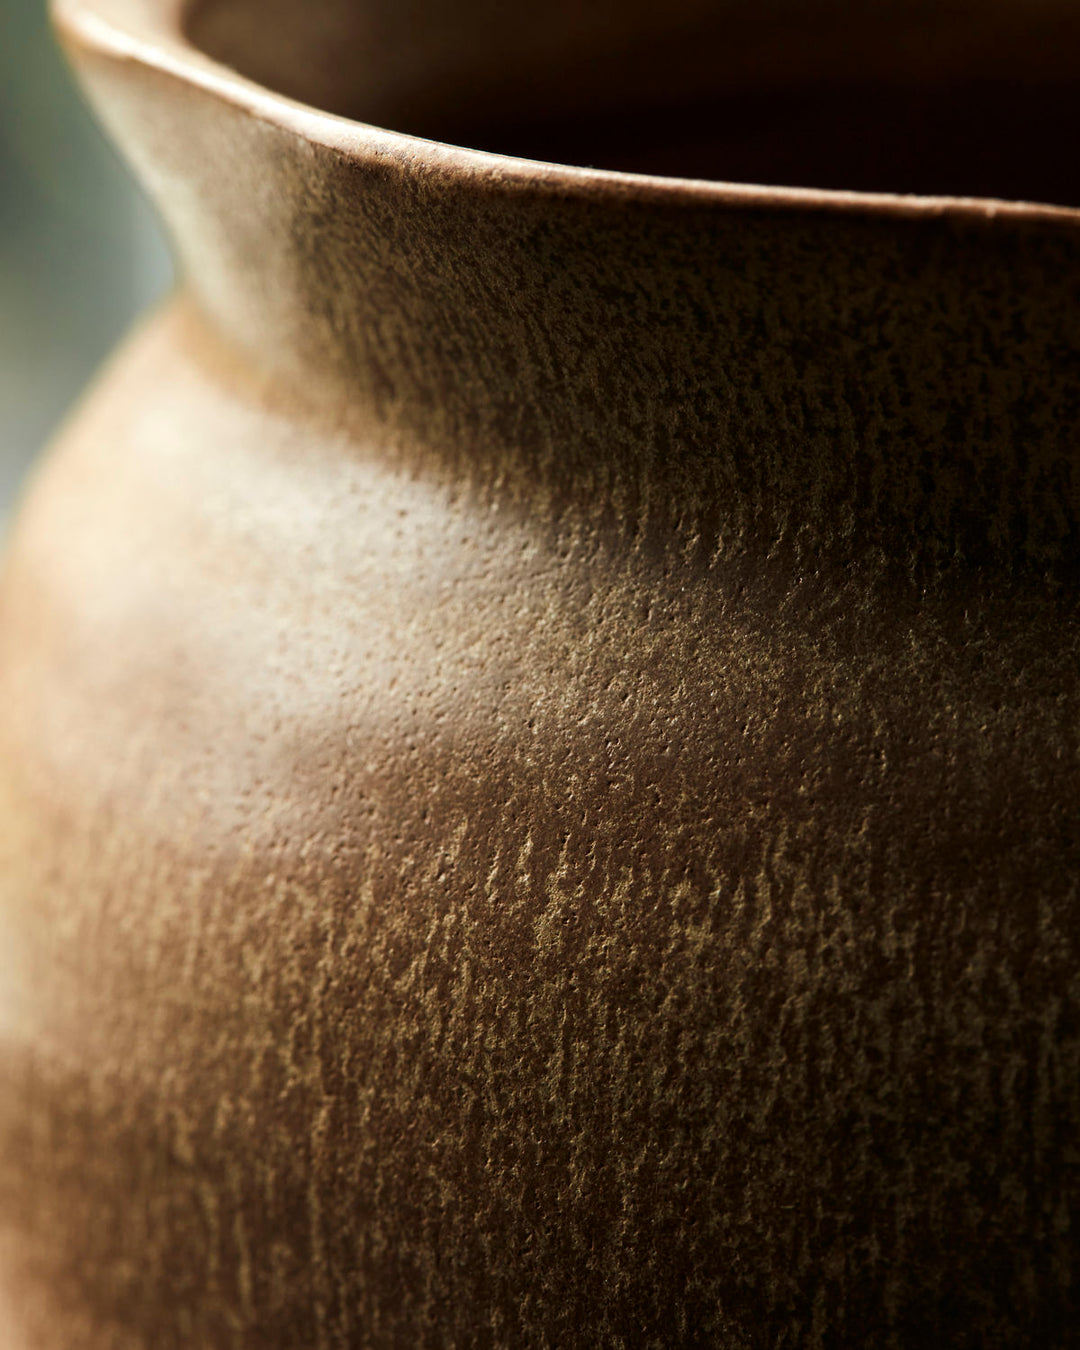 Juno Brown Vase